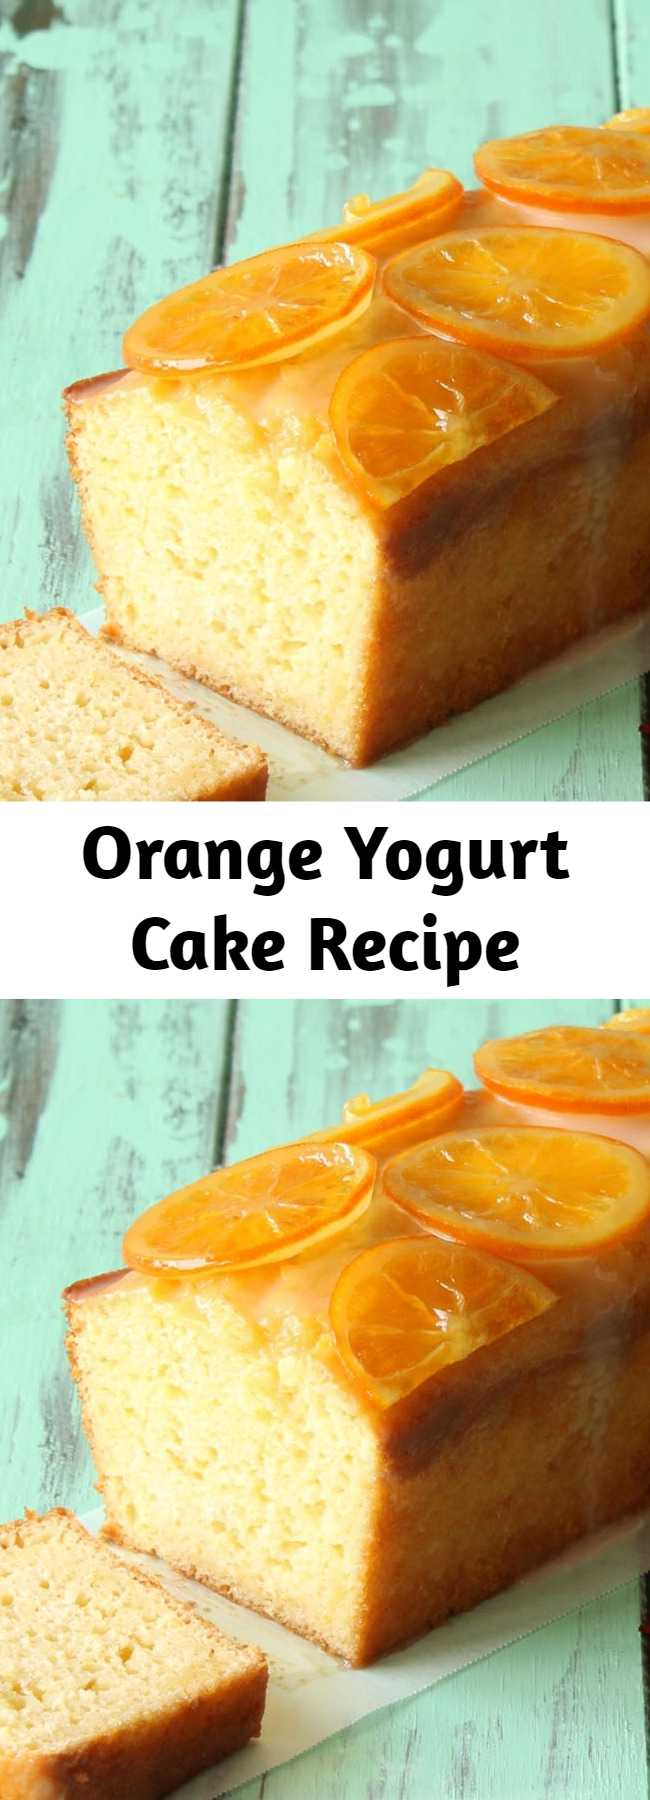 Orange Yogurt Cake Recipe - Moist orange yogurt cake loaf with candied oranges and an orange glaze